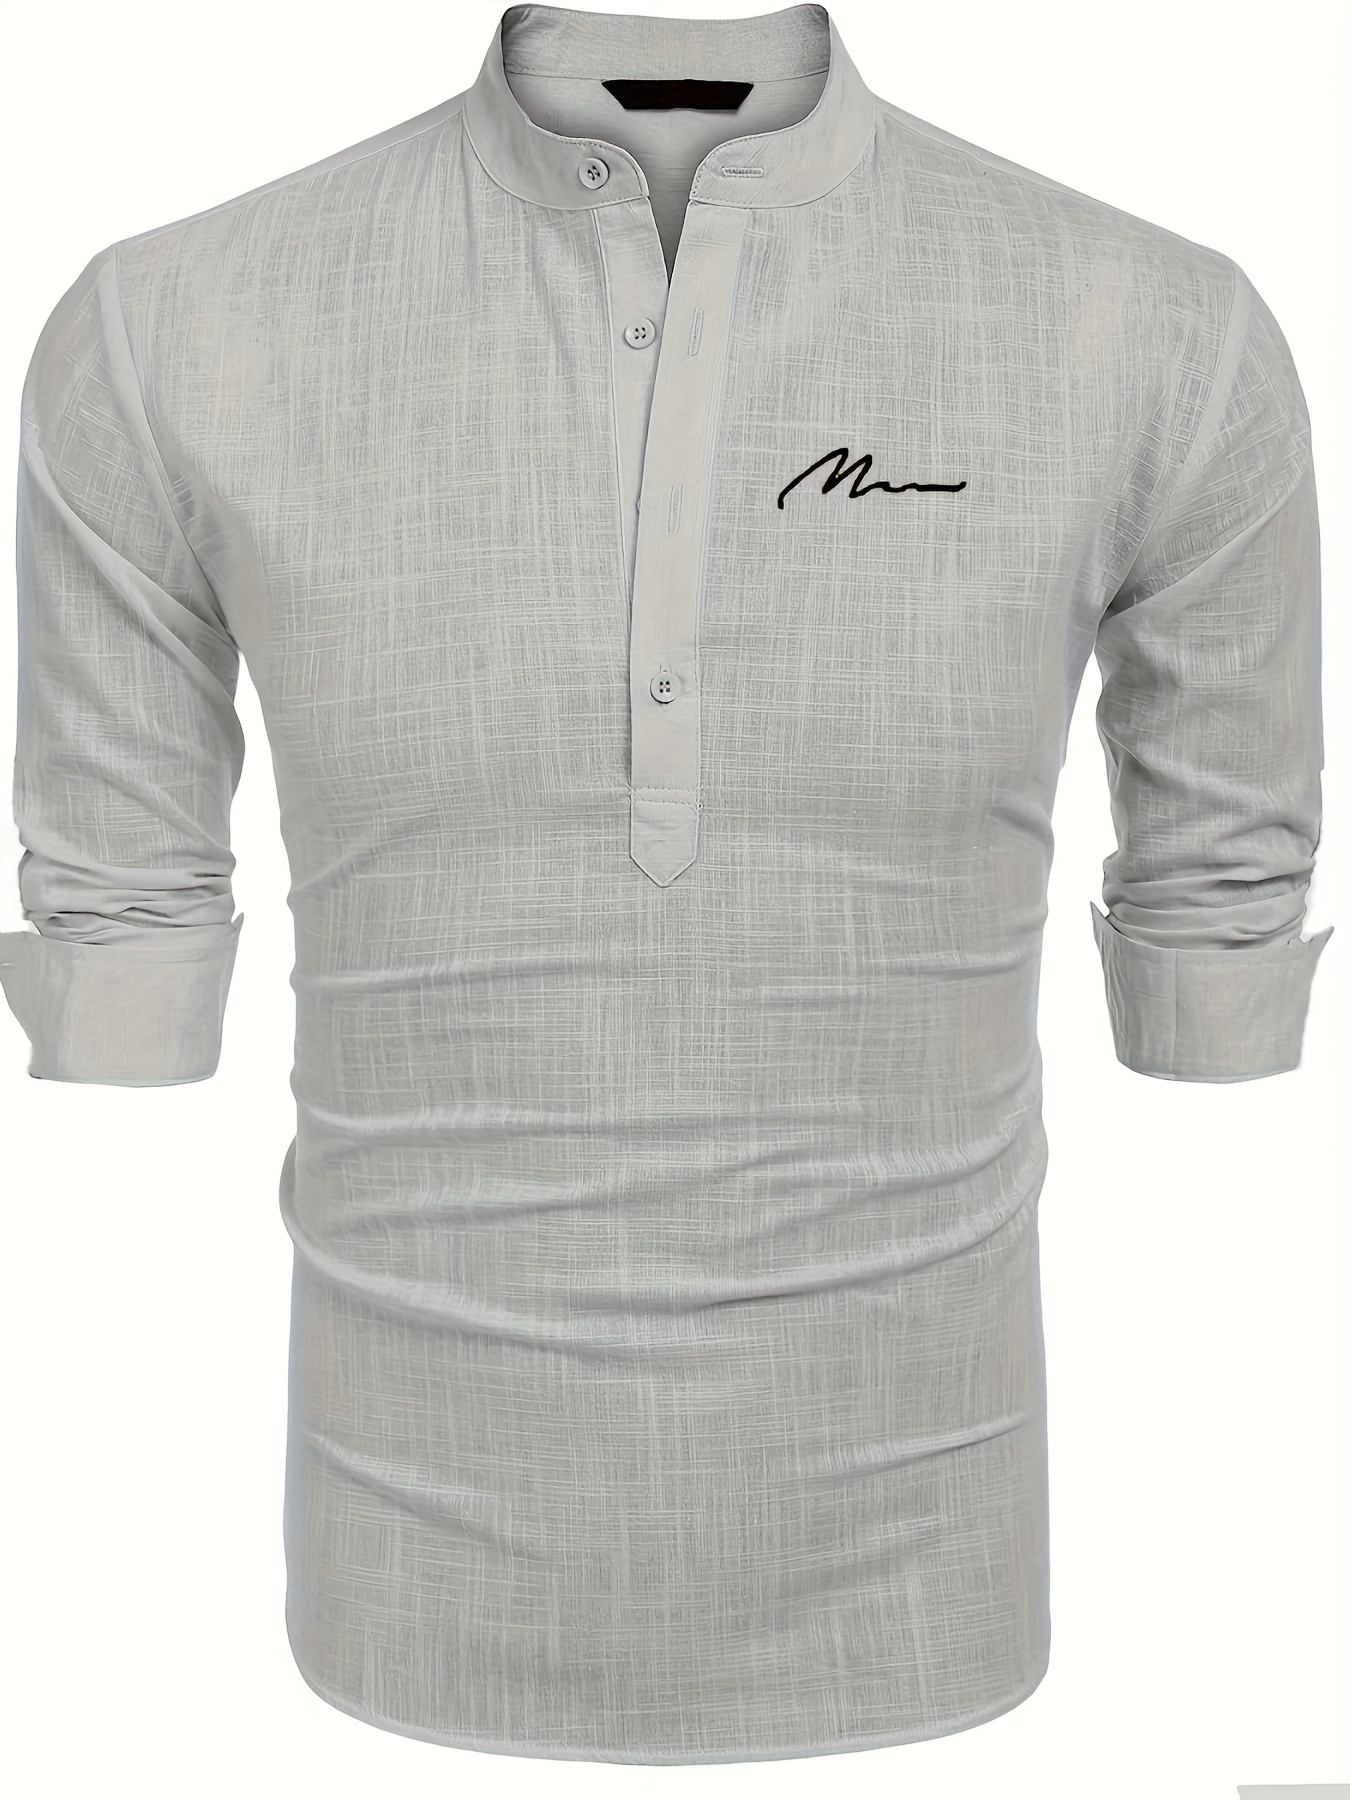 SHUNAICHI】 Men's Cotton Linen Henley Shirt Casual 3/4 Sleeve